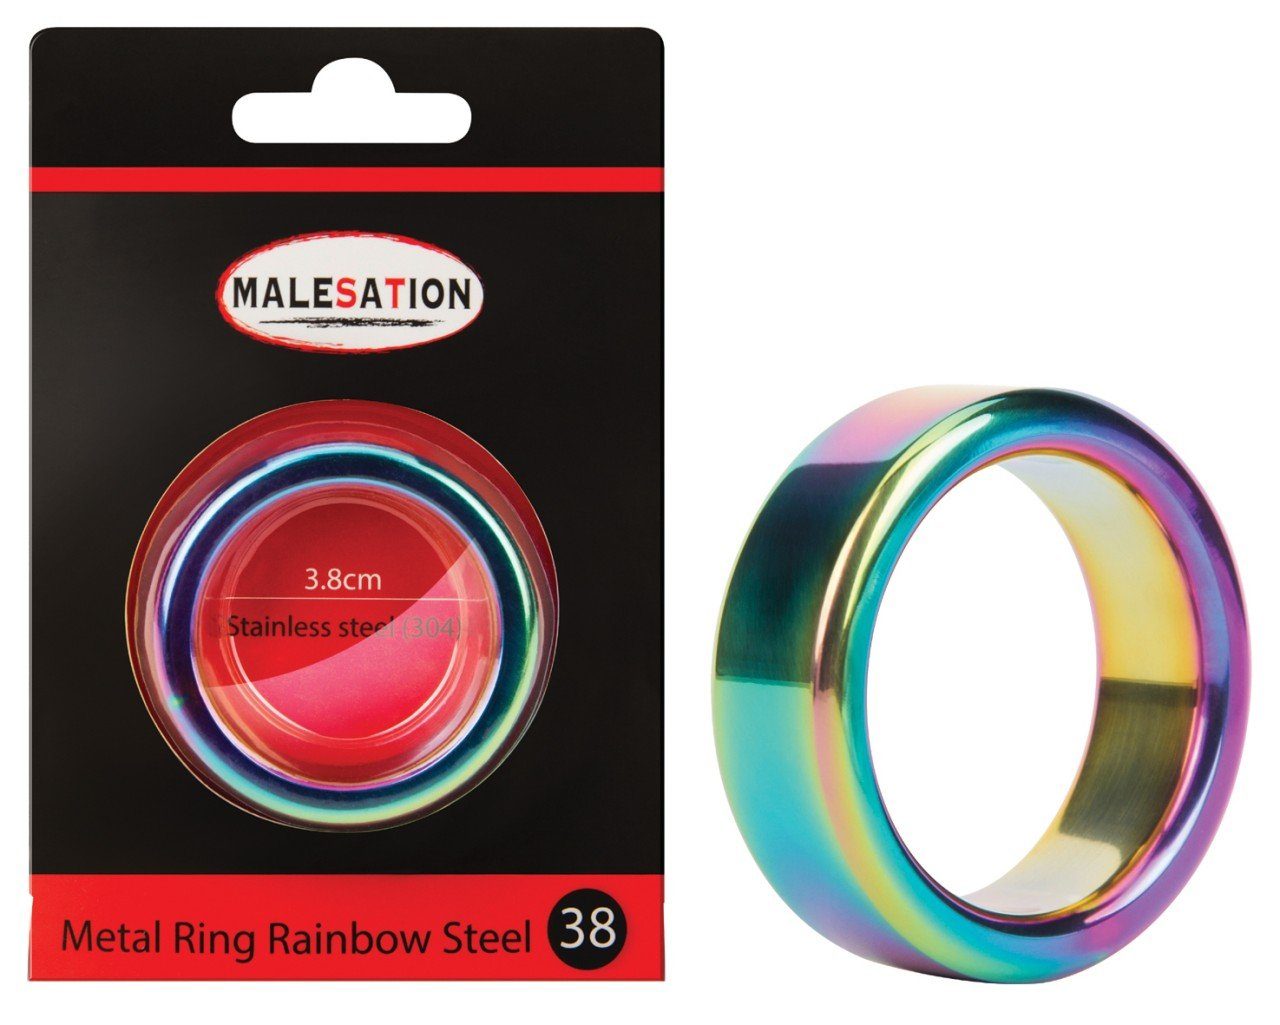 Malesation Penisring MALESATION Metal Ring Rainbow Steel - (38,44,48)